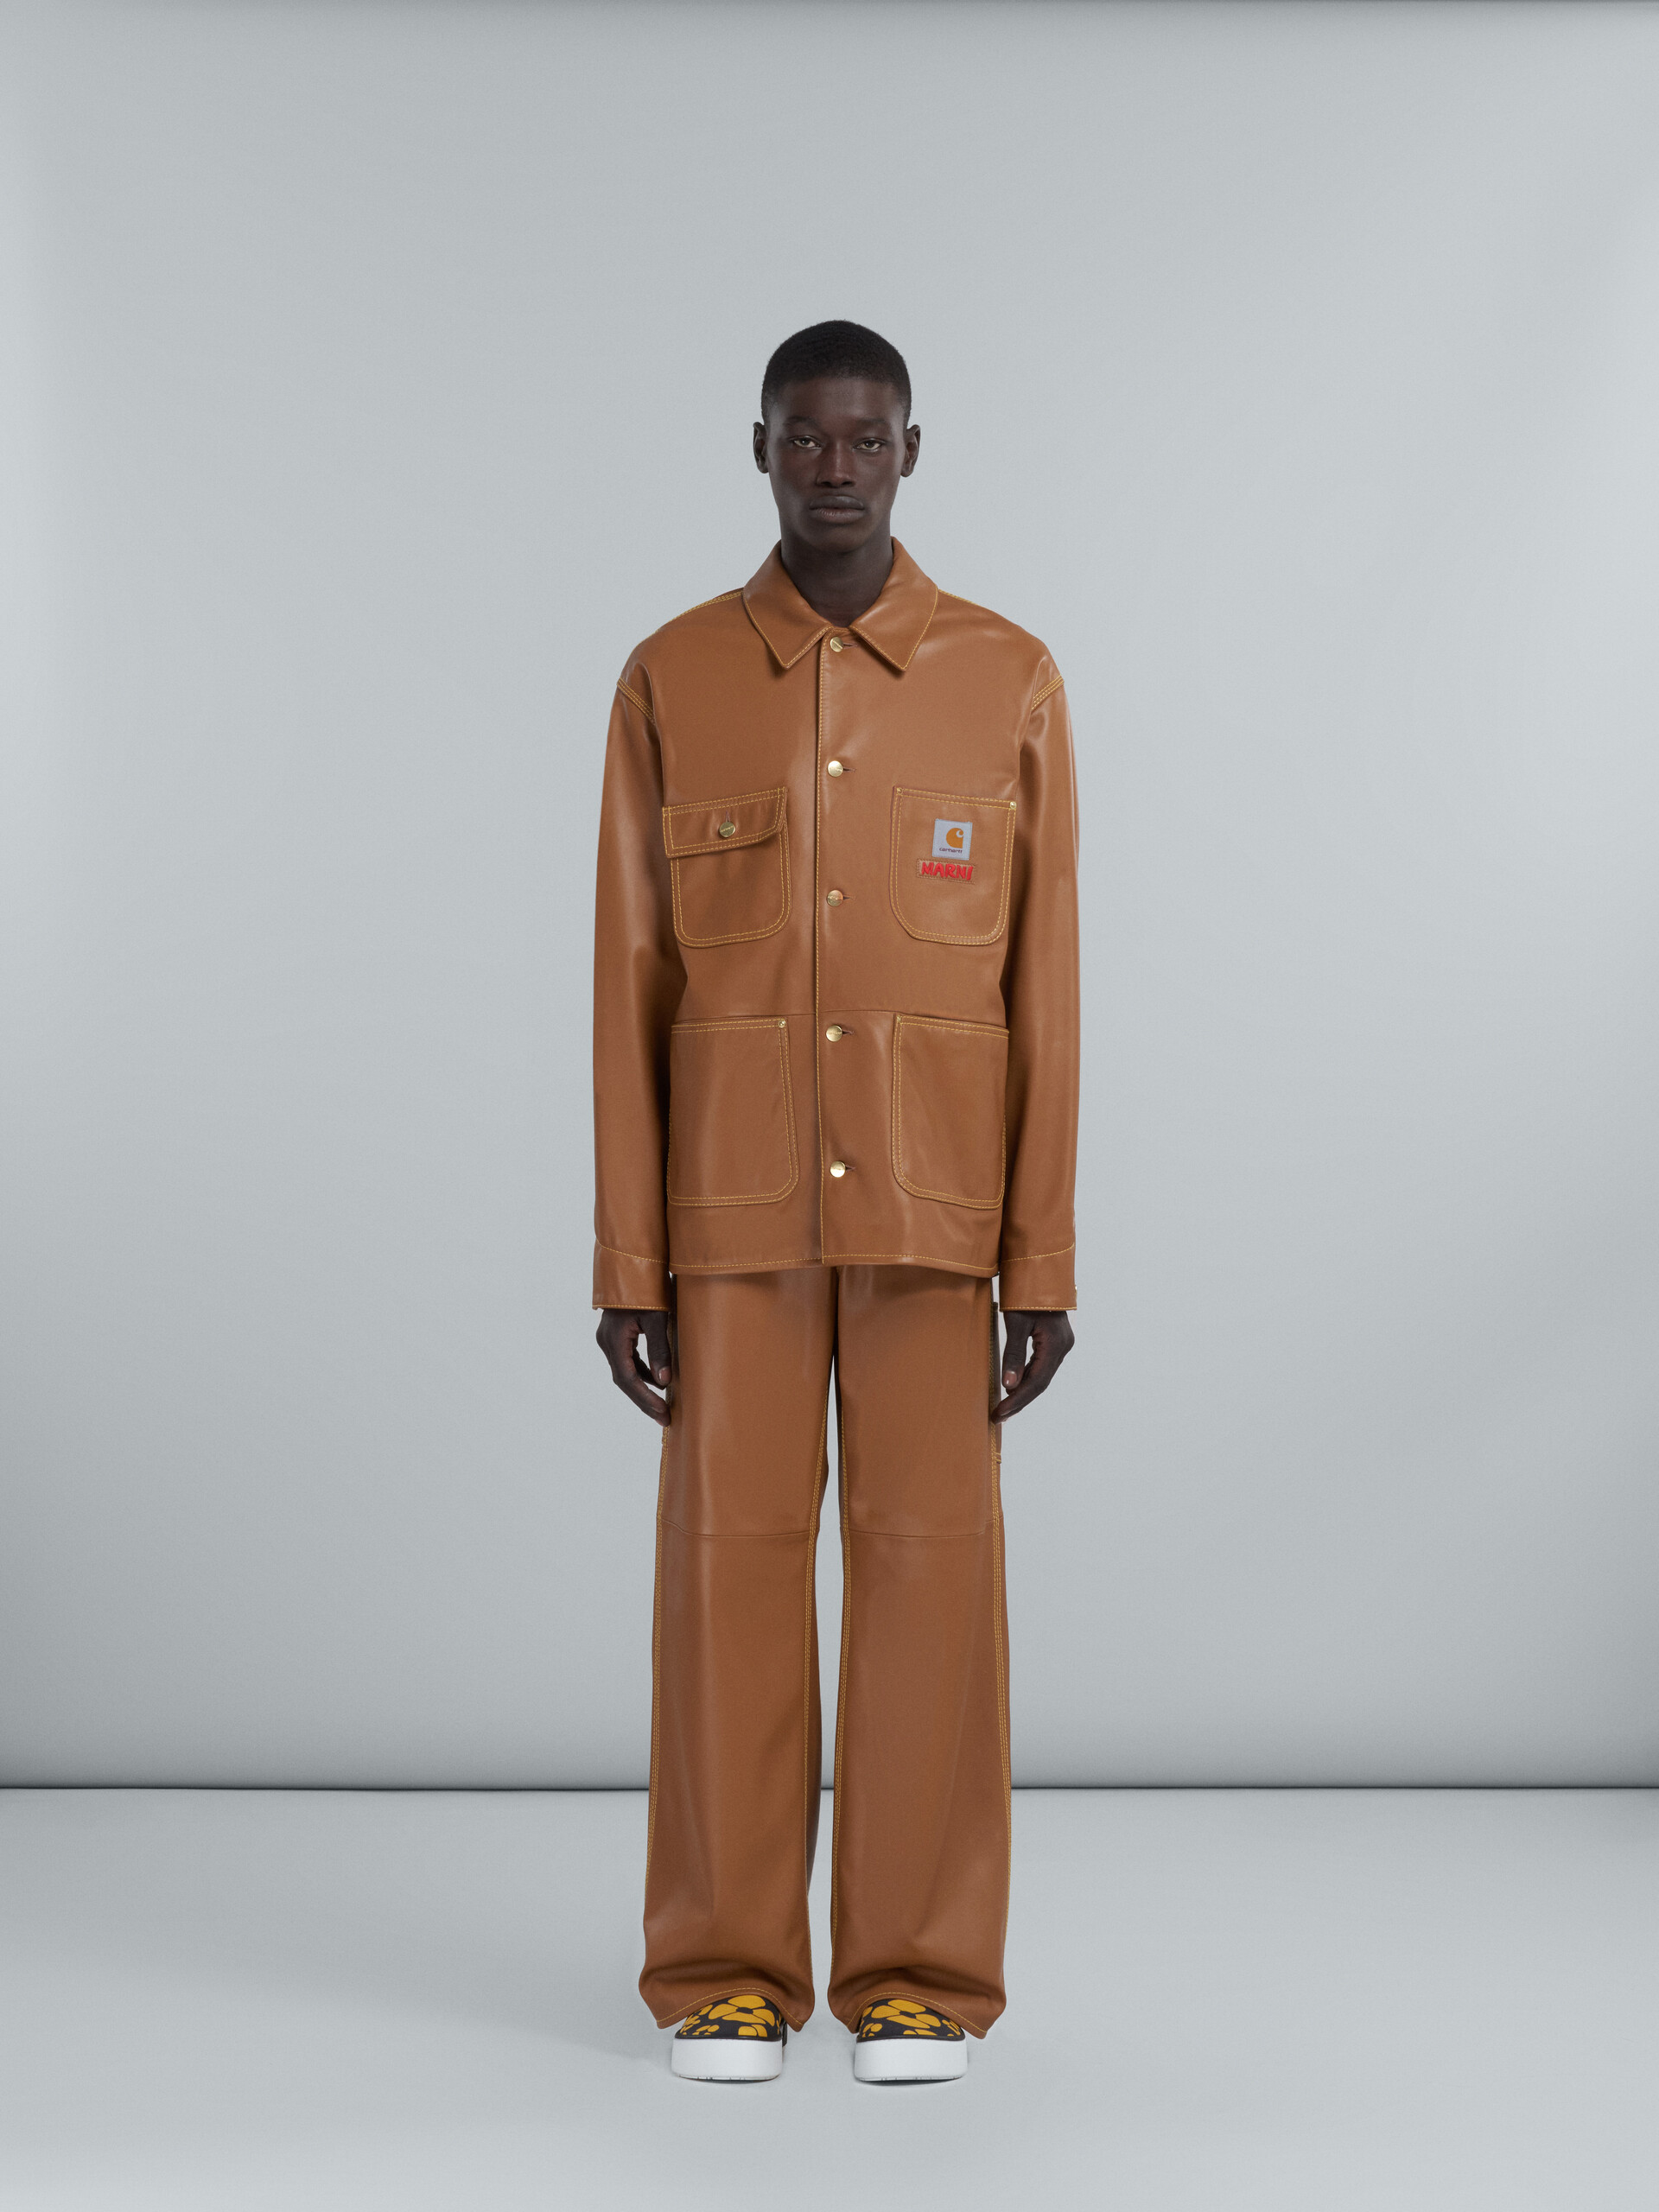 MARNI x CARHARTT WIP - brown leather trousers - Pants - Image 2